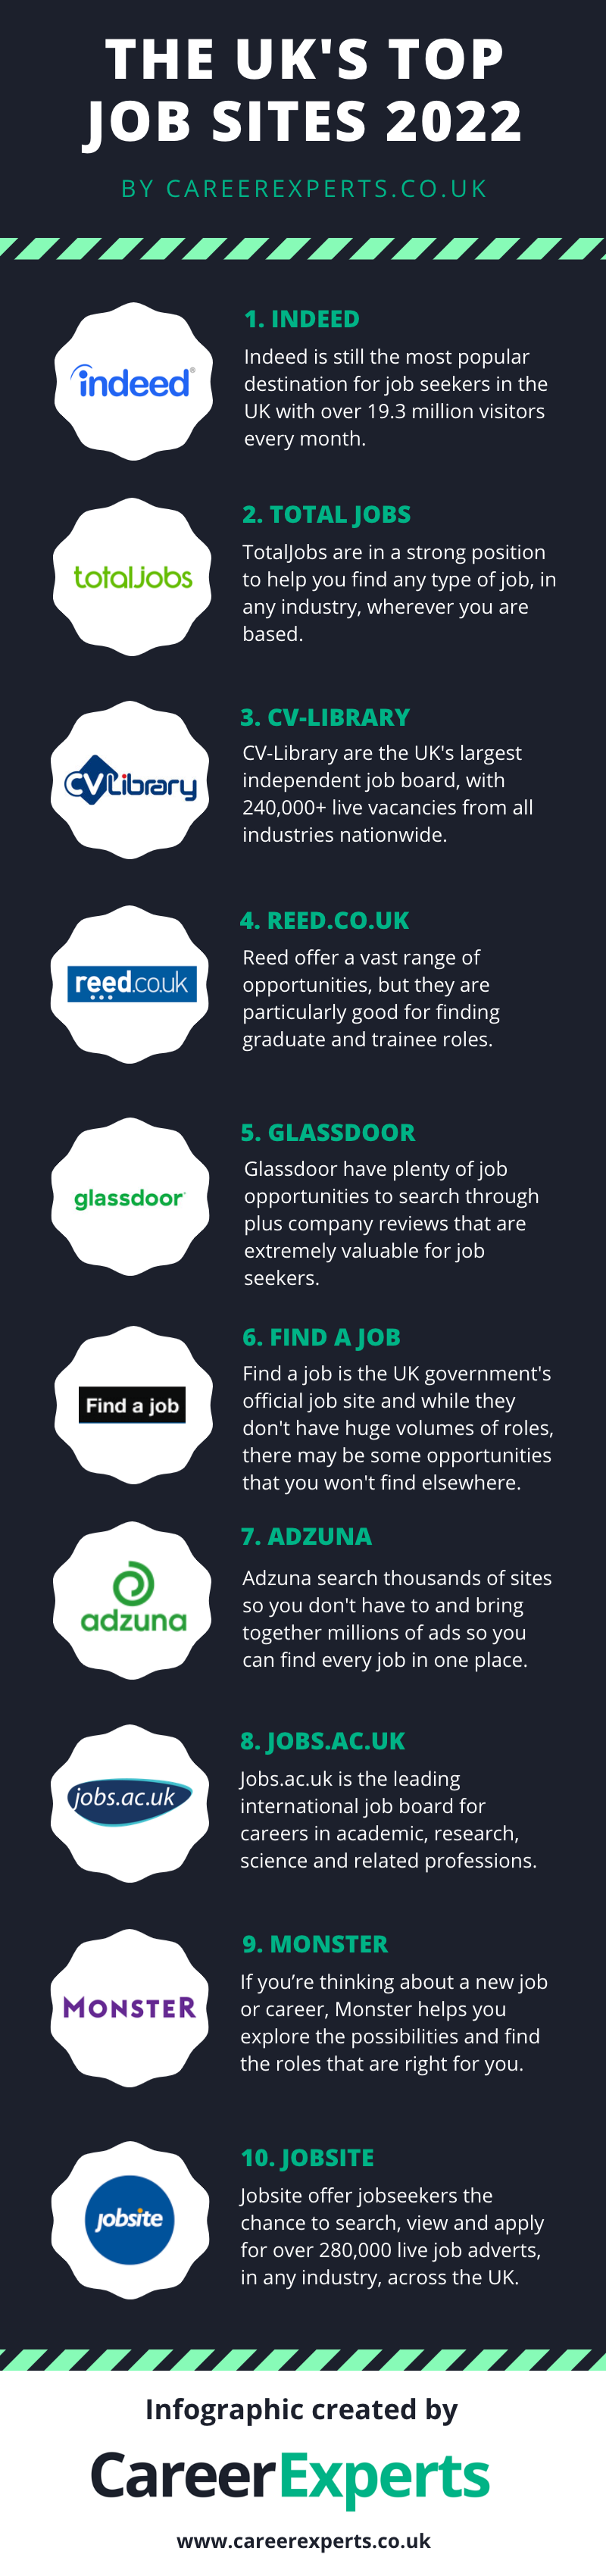 The UK's Top Job Sites 2022 Infographic